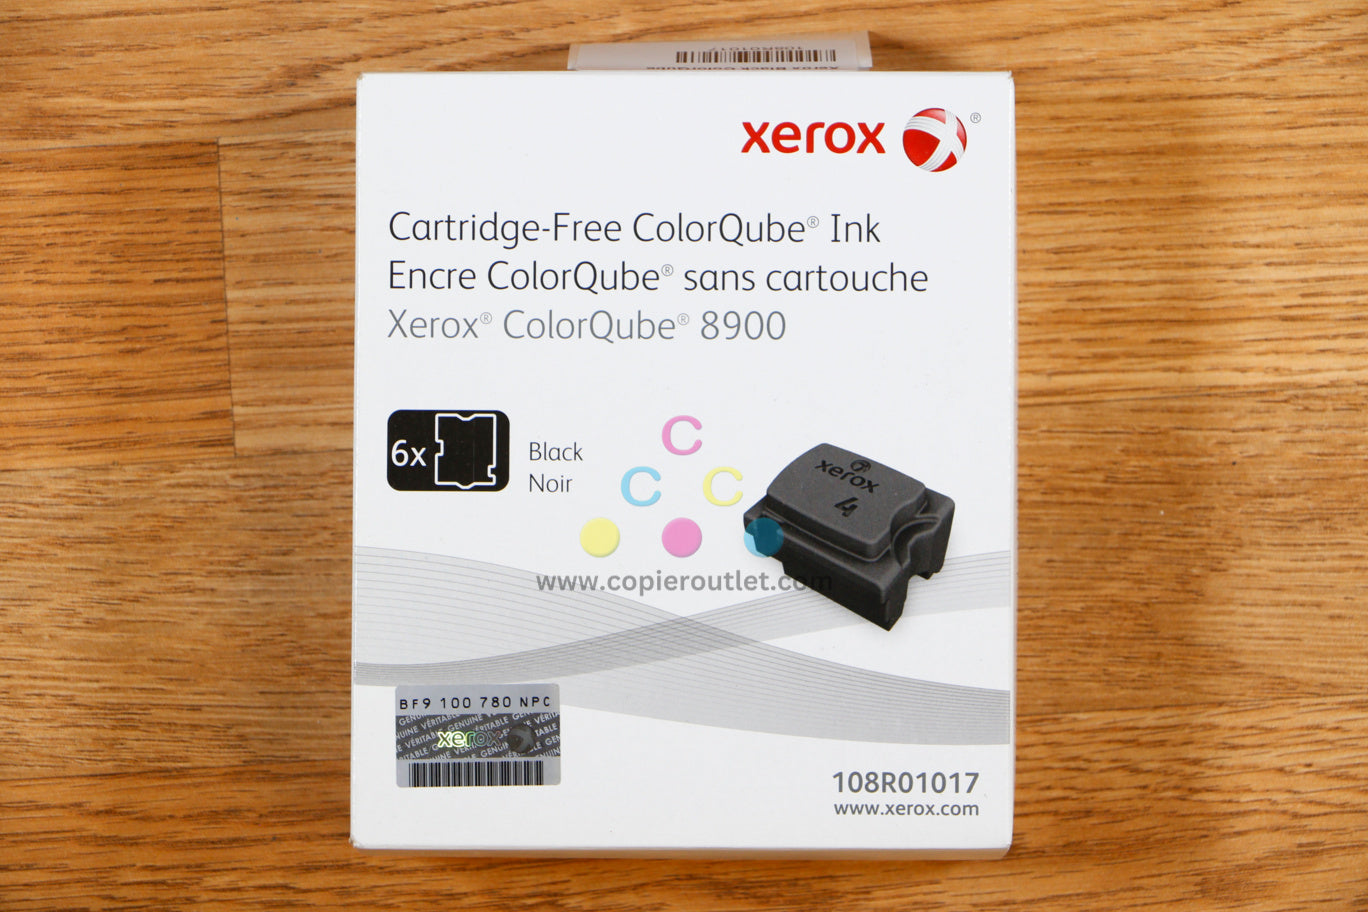 Genuine Xerox Black ColorQube 8900 Cartridge-Free Ink 108R01017 SameDay Shipping